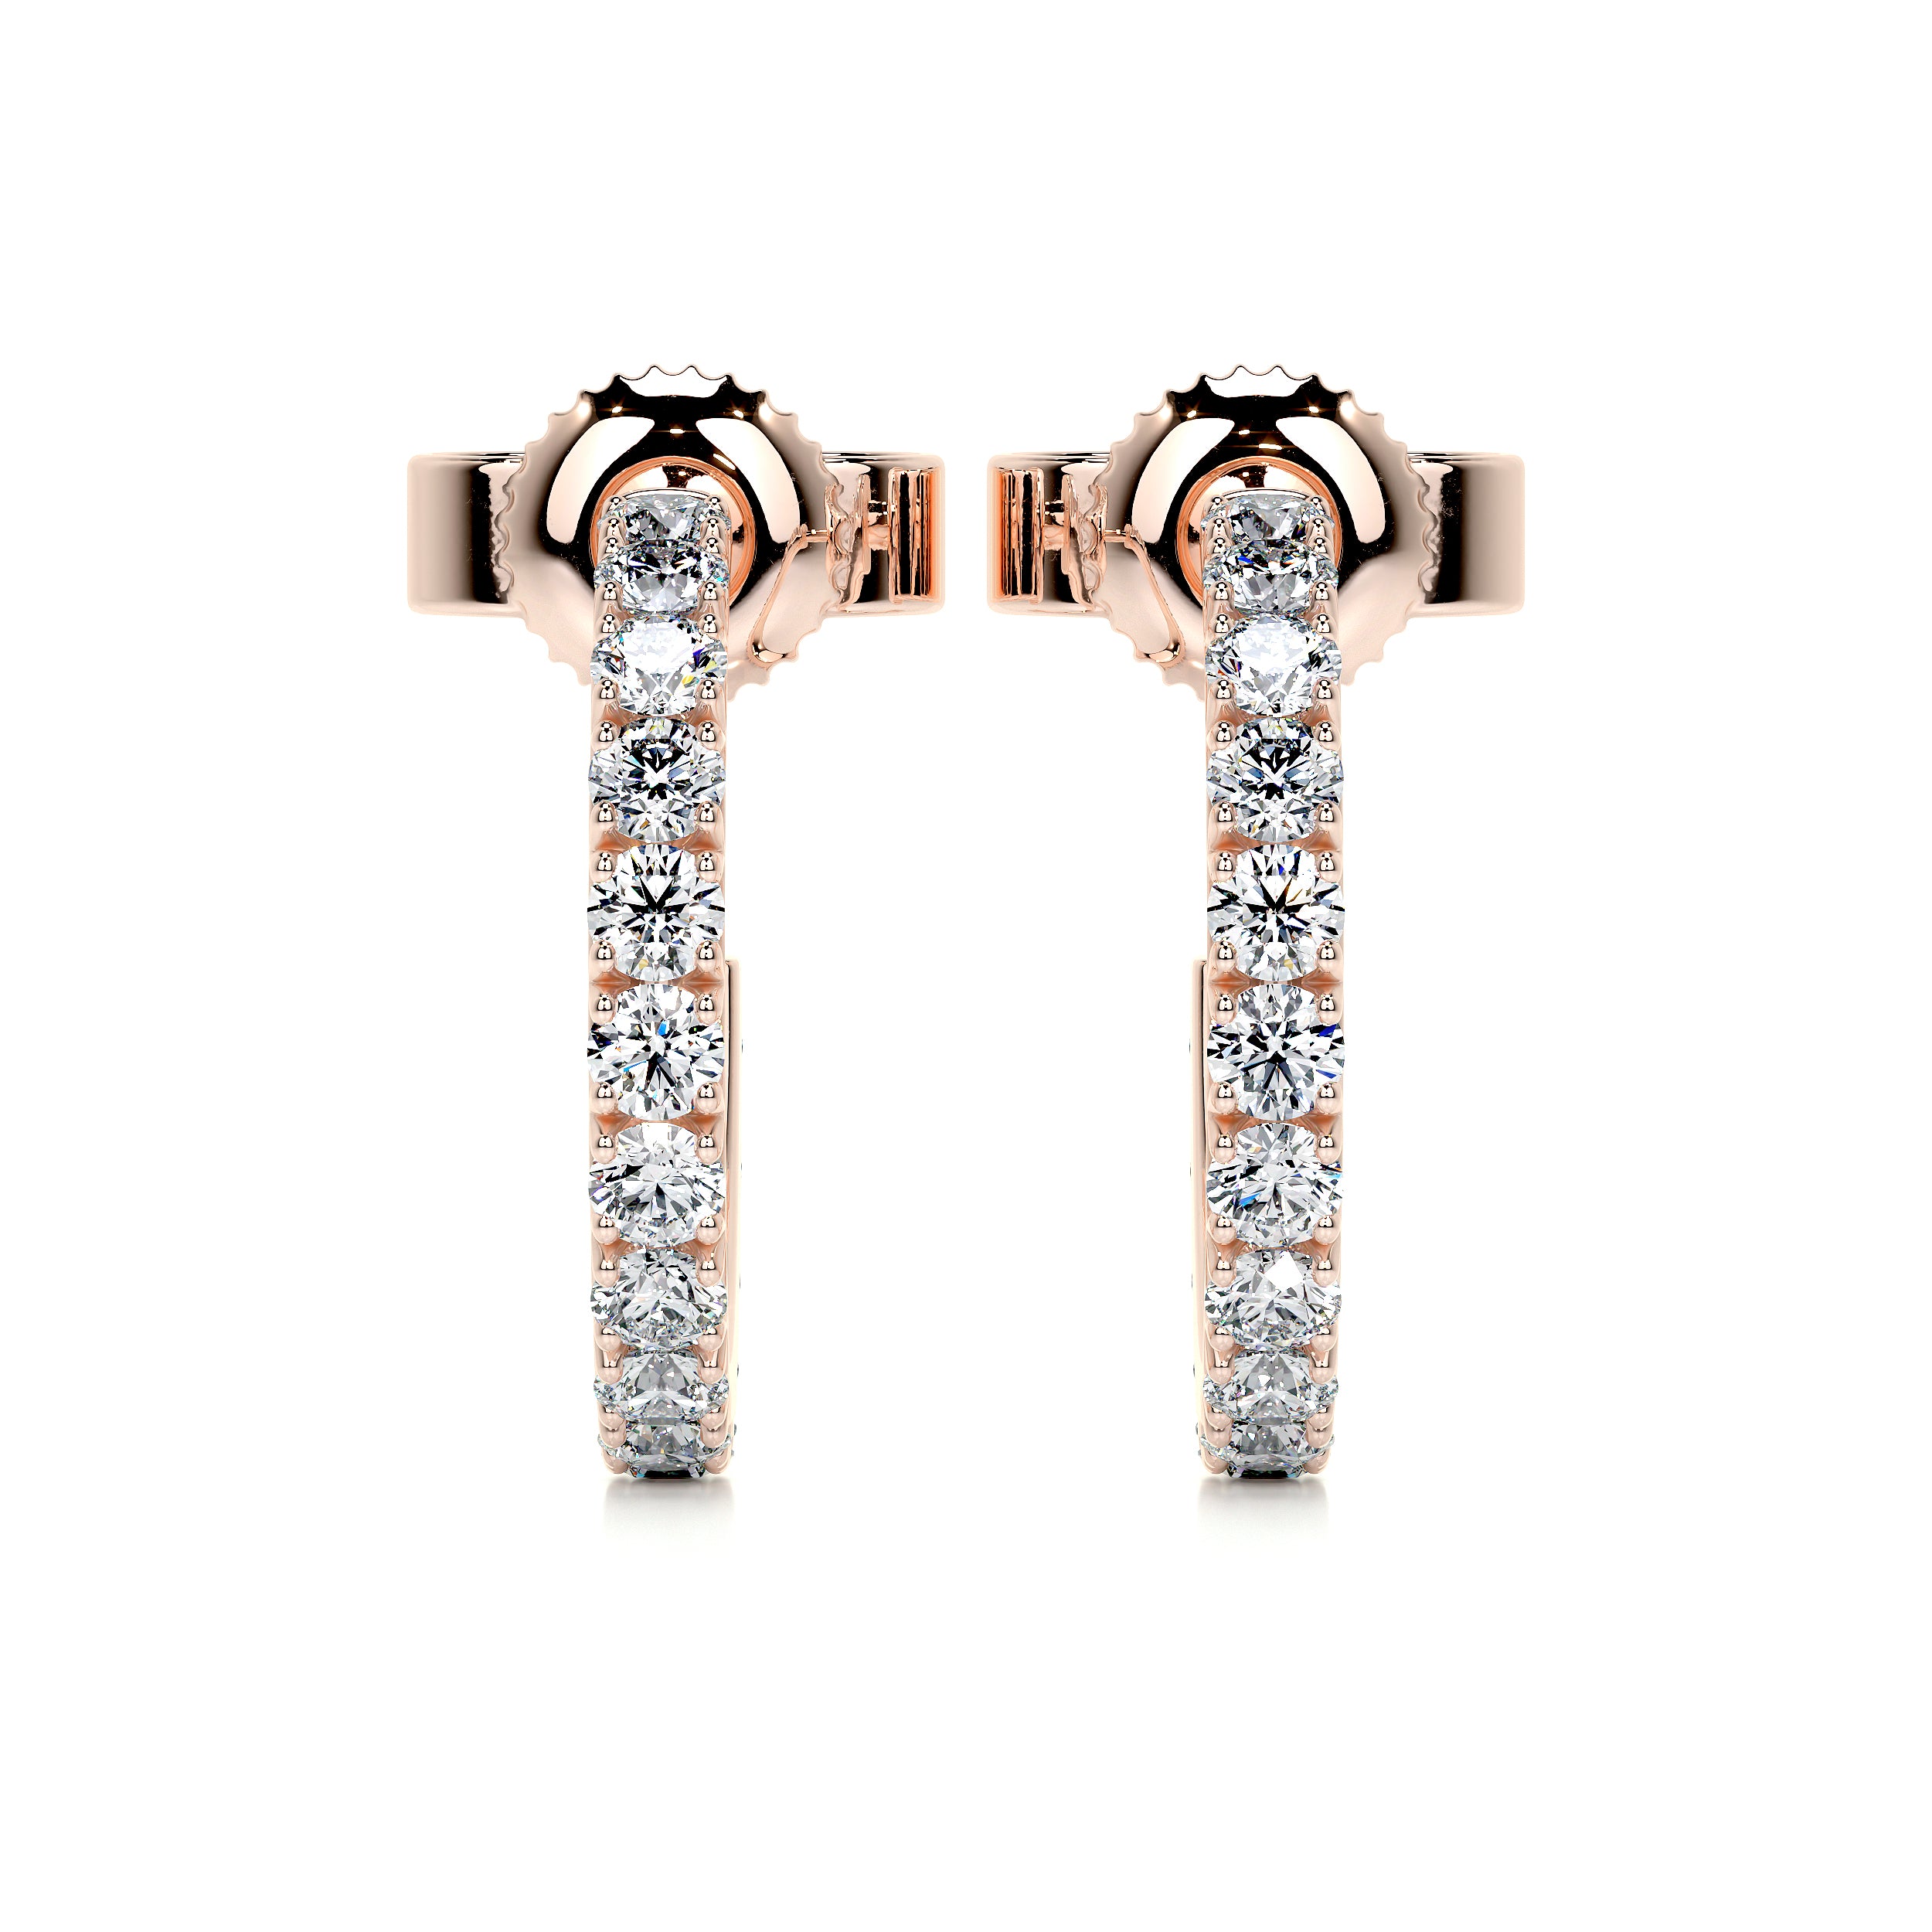 Nicole Diamond Earrings   (3 Carat) -14K Rose Gold